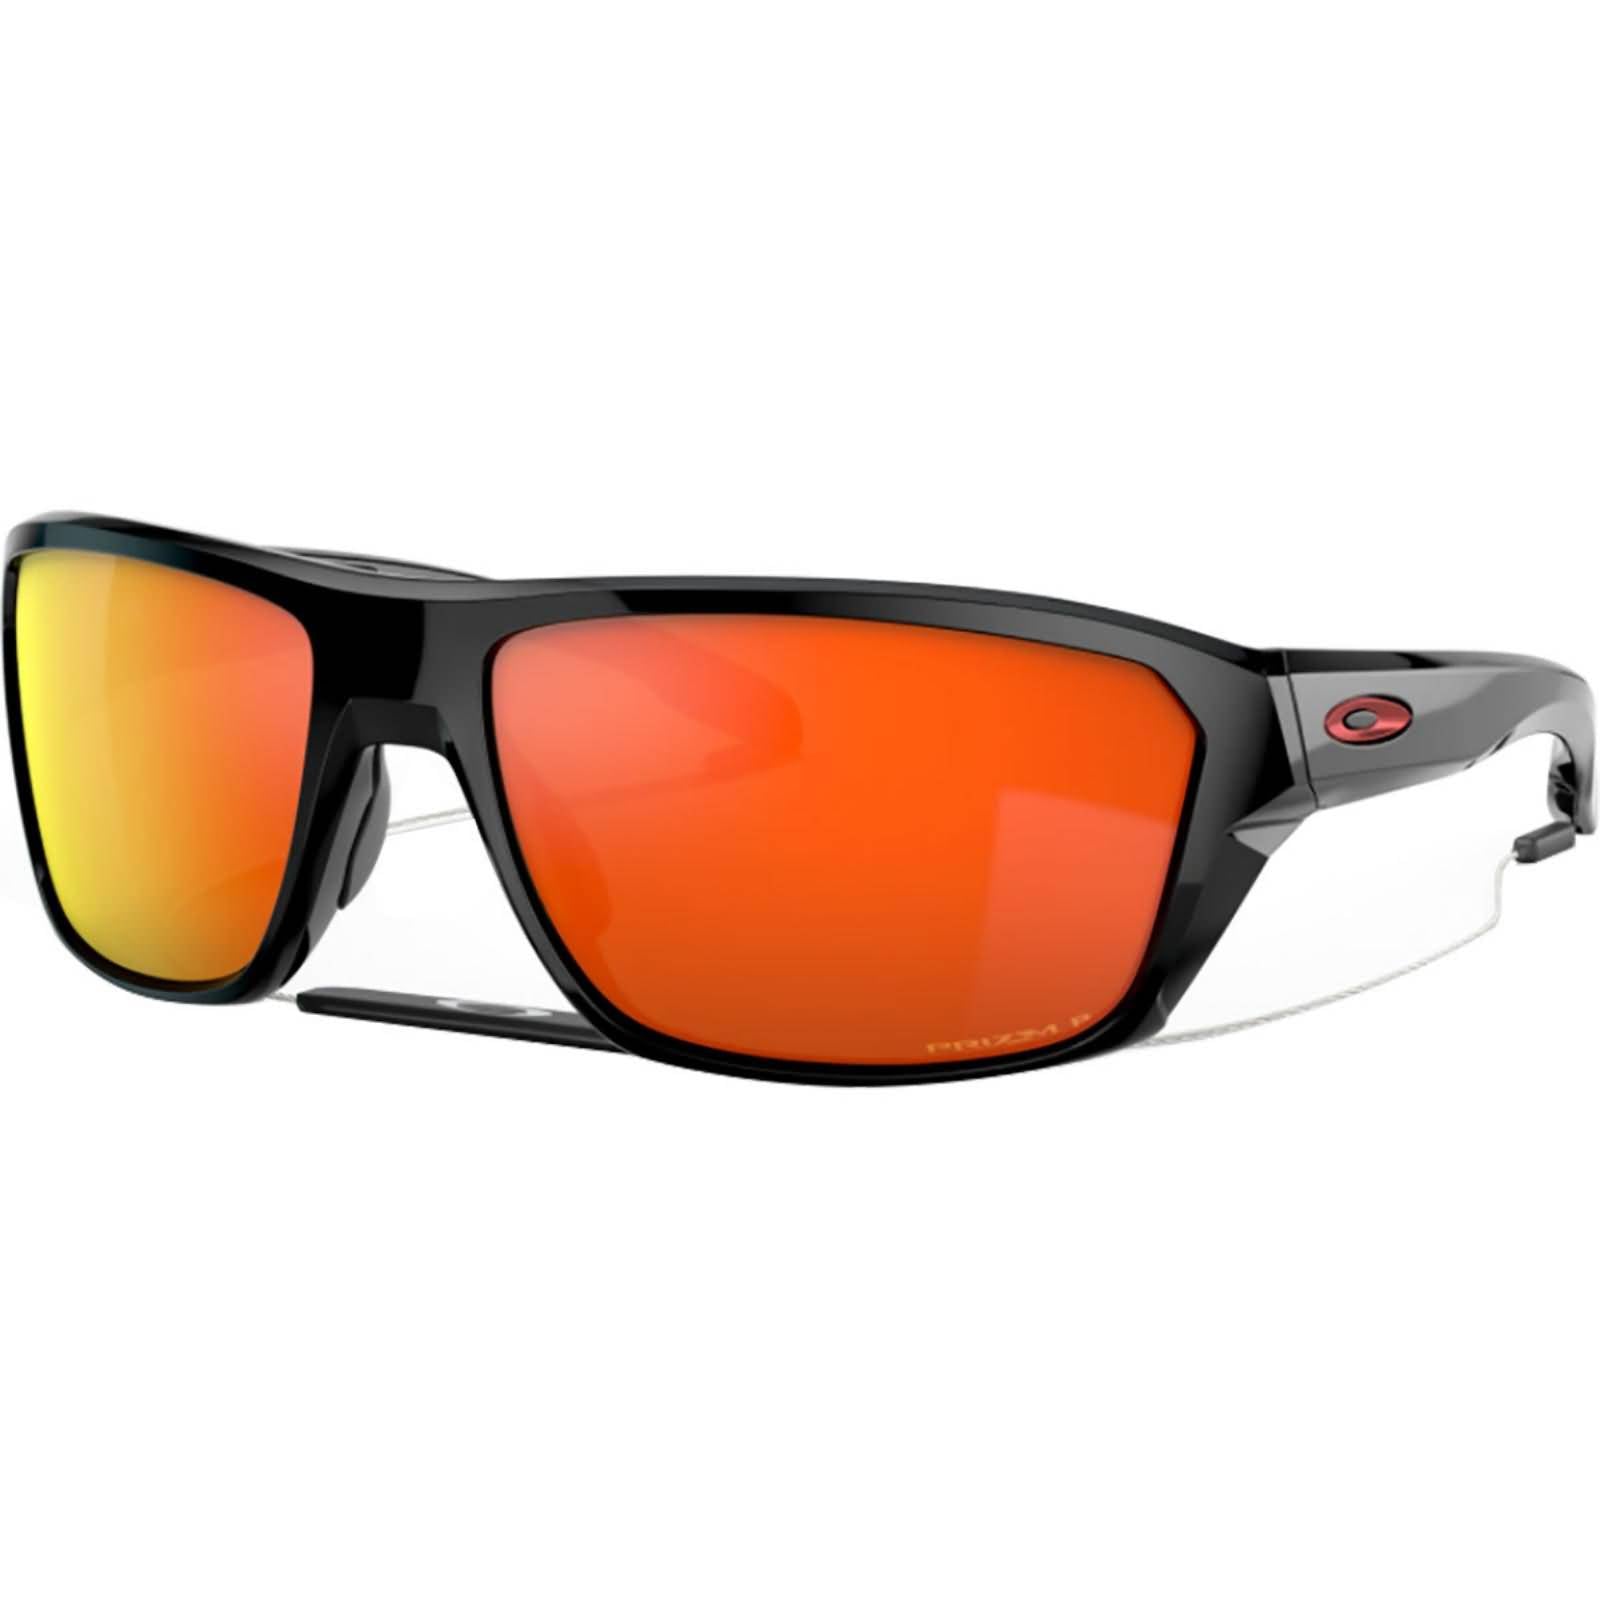 Oakley Sunglasses - Split Shot - Polished Black/Prizm Ruby